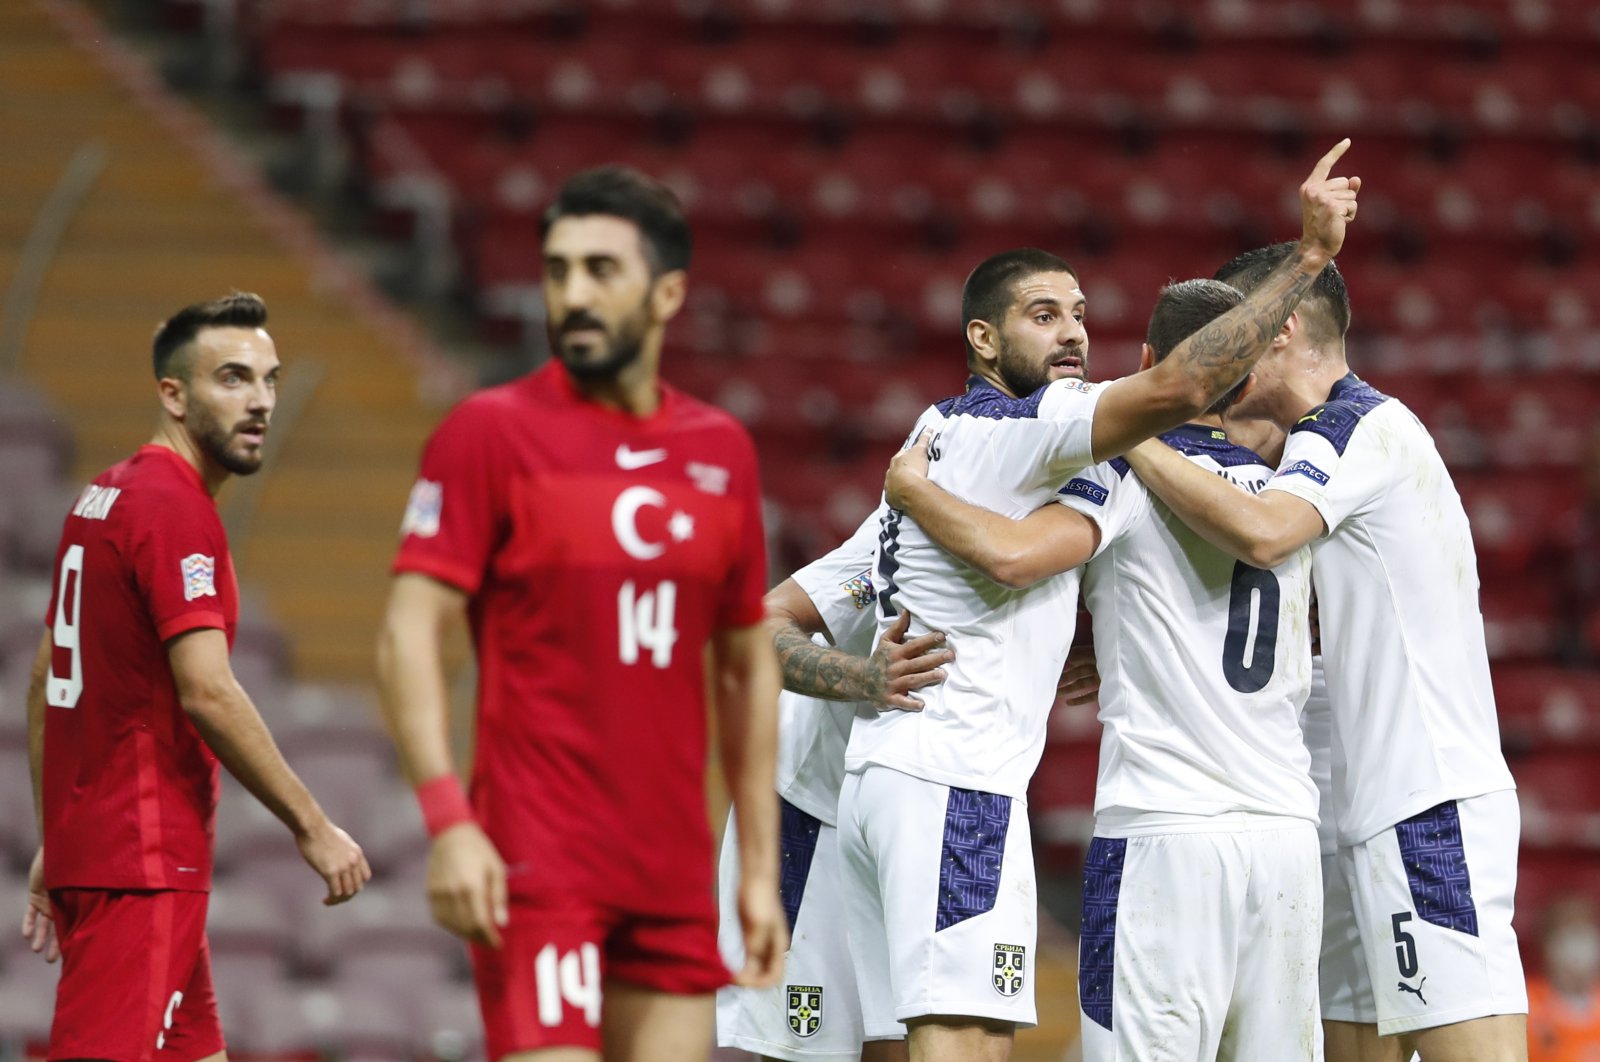 Turkey's Kenan Karaman (L) and Mahmut Takdemir react as Serbian players celebrate scoring a goal during a UEFA Nations League match, in Istanbul, Turkey, Oct. 14, 2020. (Reuters Photo)